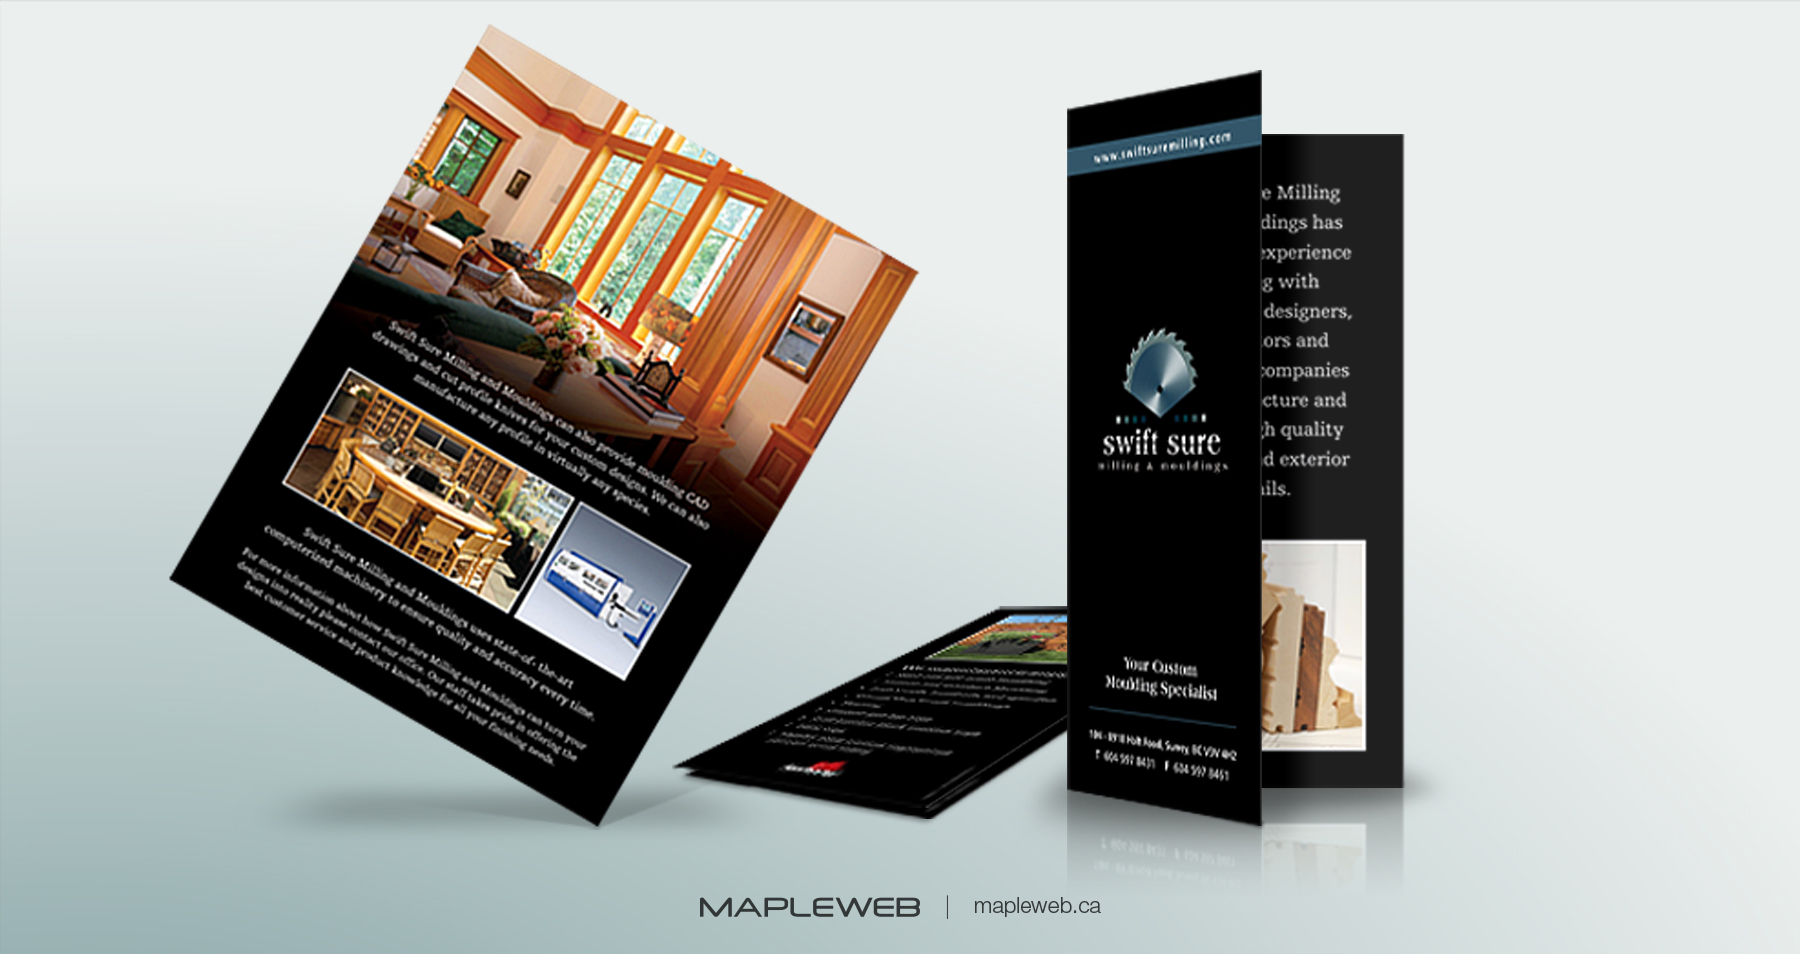 Swift Sure Milling Bifold Brochure design by Mapleweb